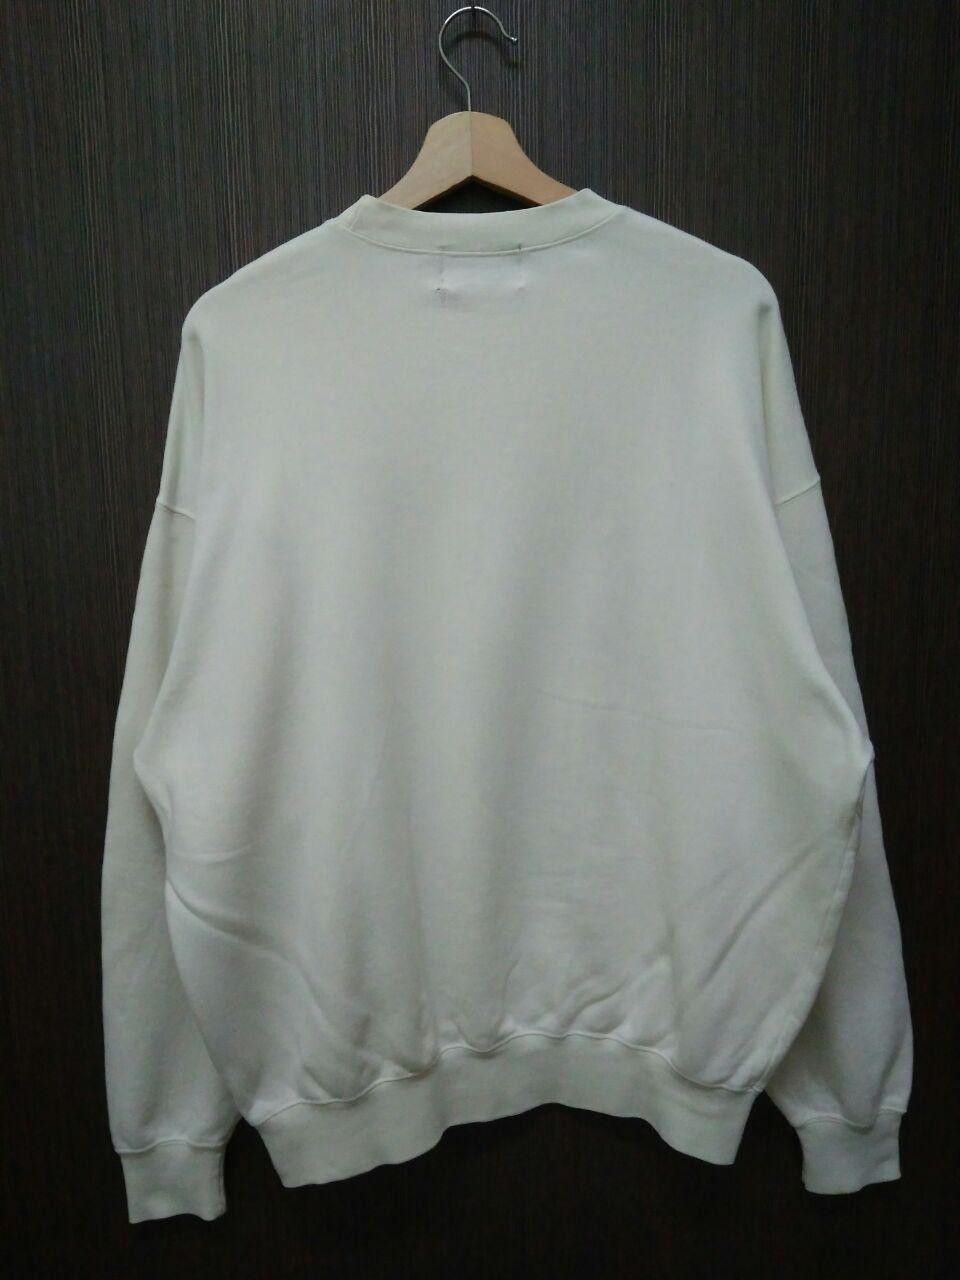 Vintage Vtg Mr Junko koshino Embroidery Sweatshirt Sweater Jumper Size US L / EU 52-54 / 3 - 2 Preview